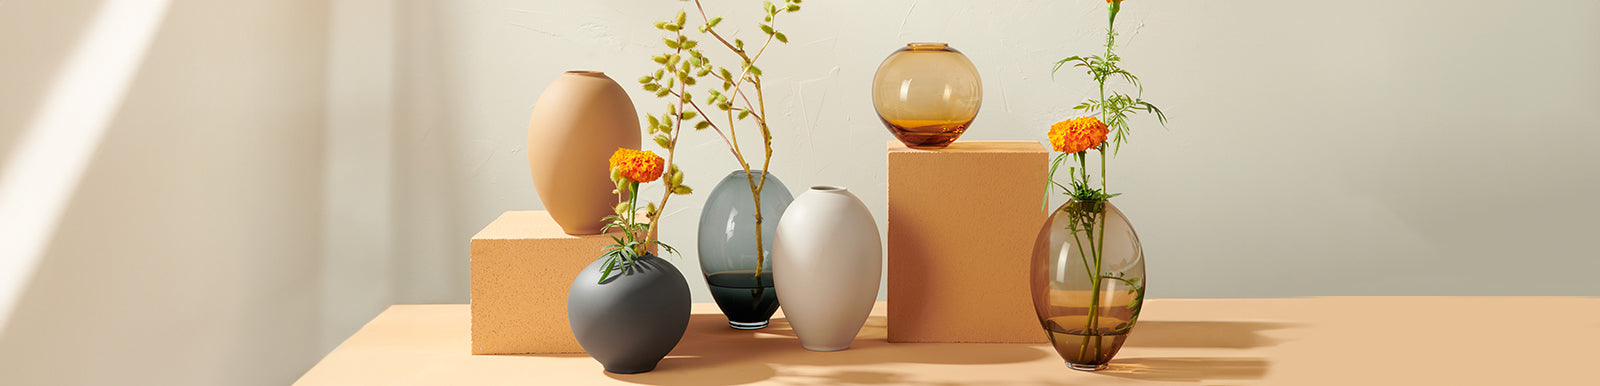 Vases & Flowers - Modern Quests